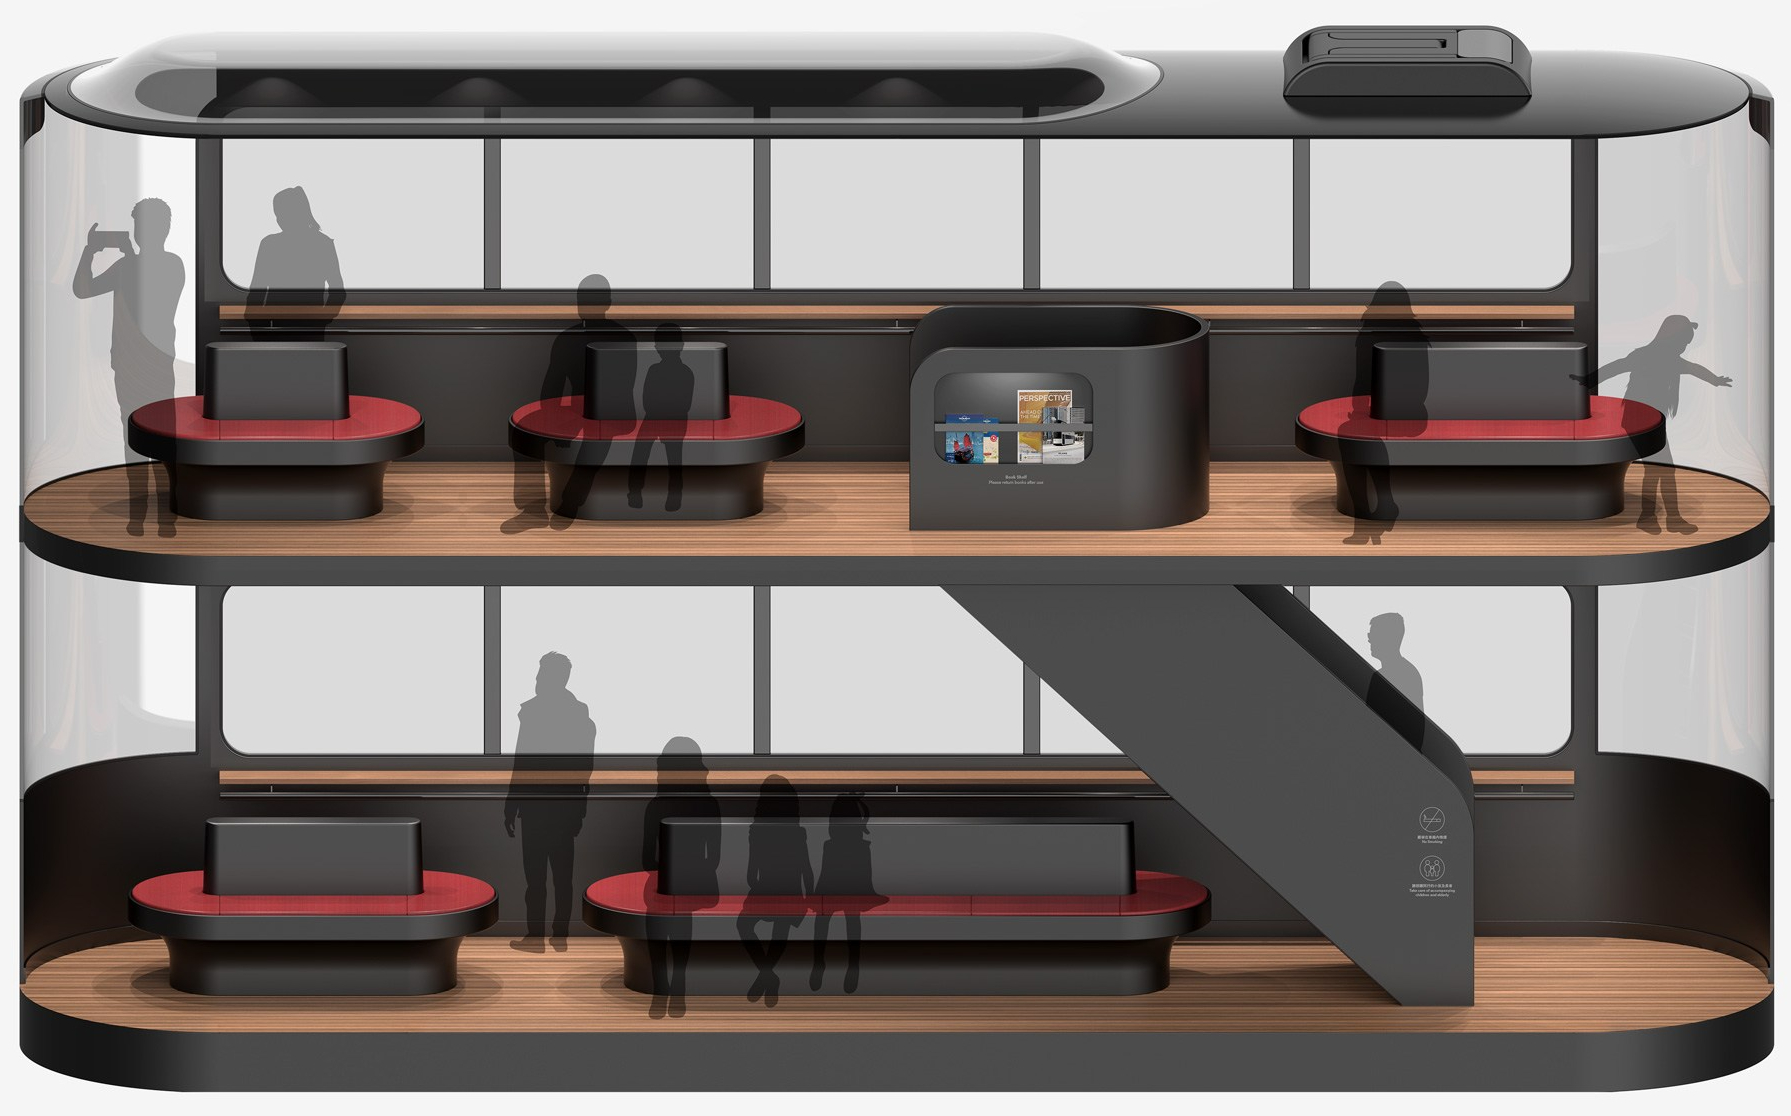 Andrea Ponti Driverless Tram interior seating